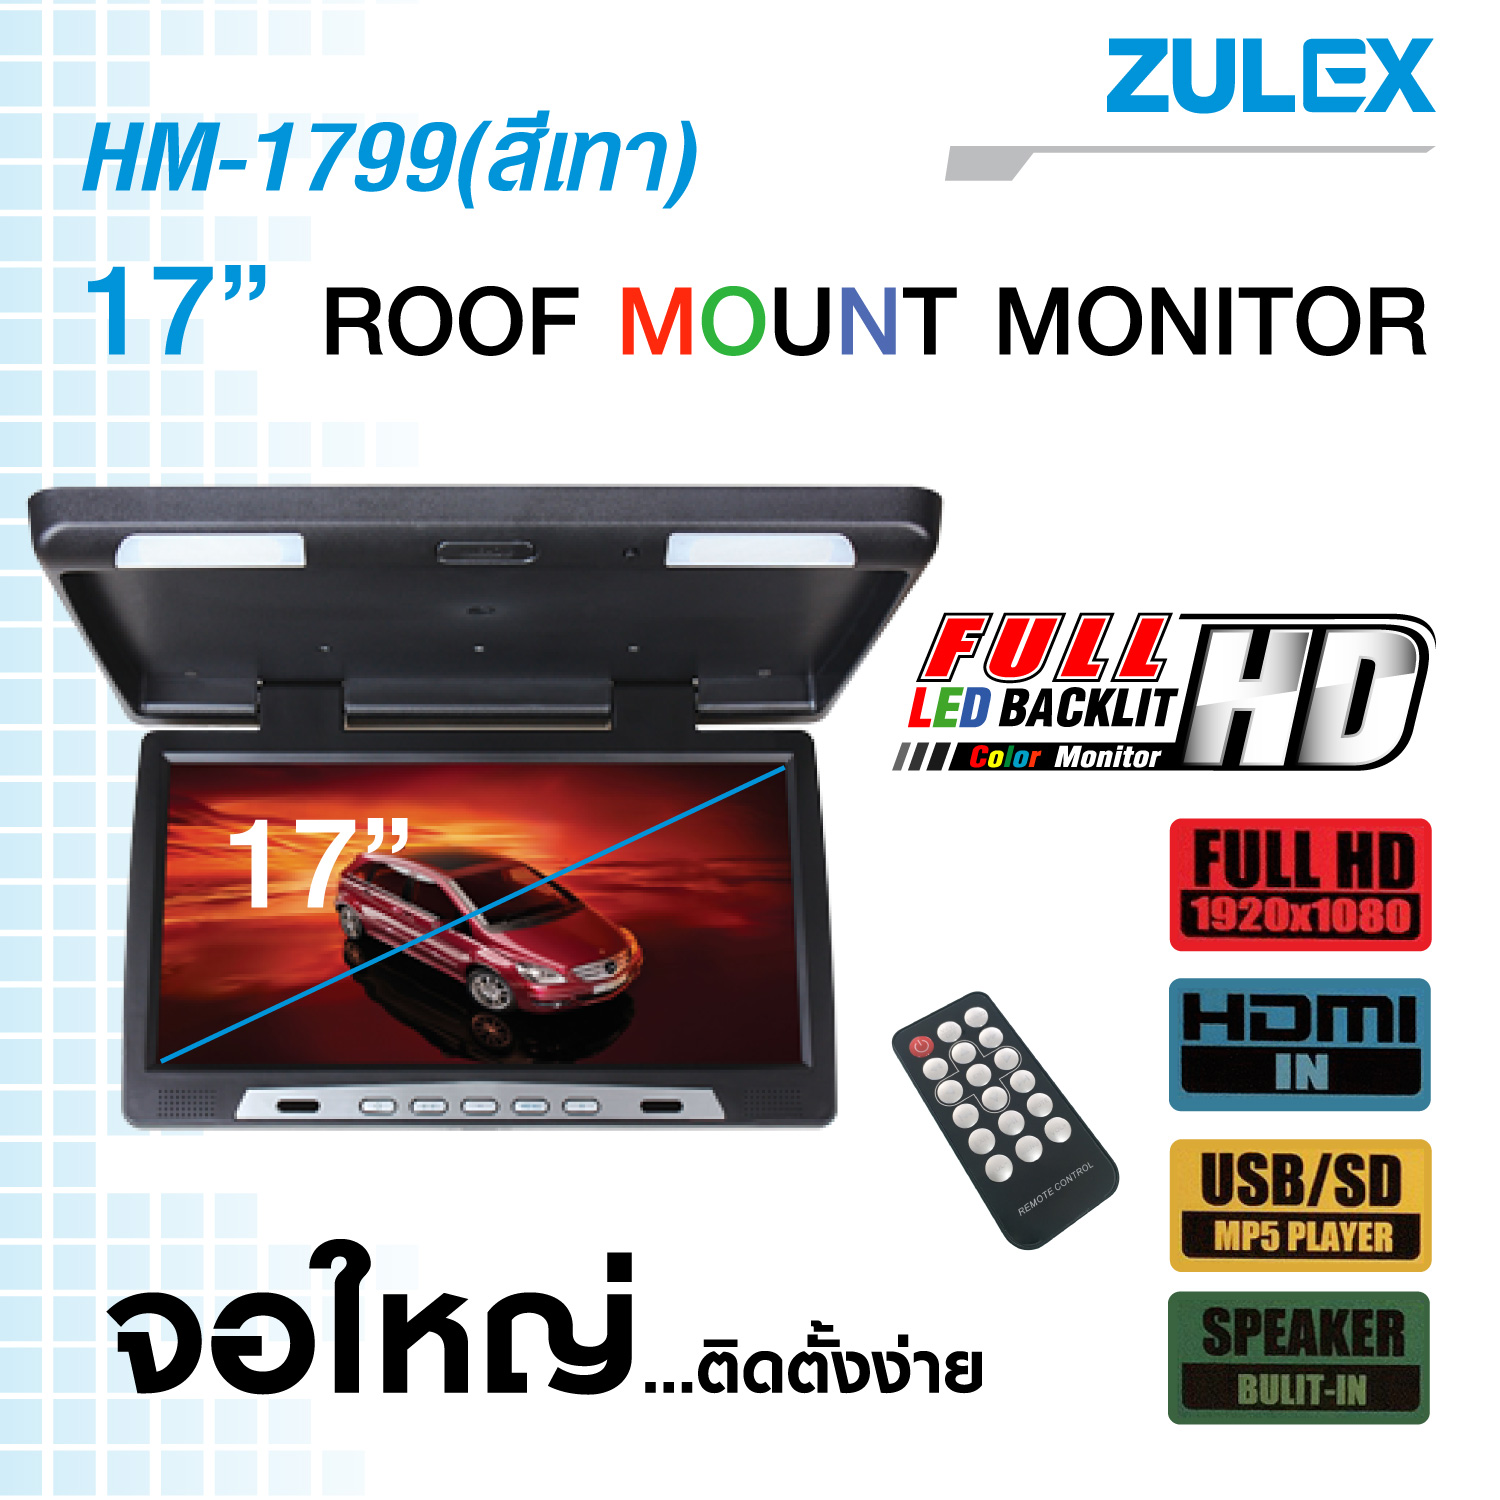 Zulex จอเพดานติดรถยนต์ รุ่น HM-1799 สีเทา จอภาพขนาด 17 นิ้ว รองรับการใช้งาน HDMI, USB, SD Card, Speaker Built-in